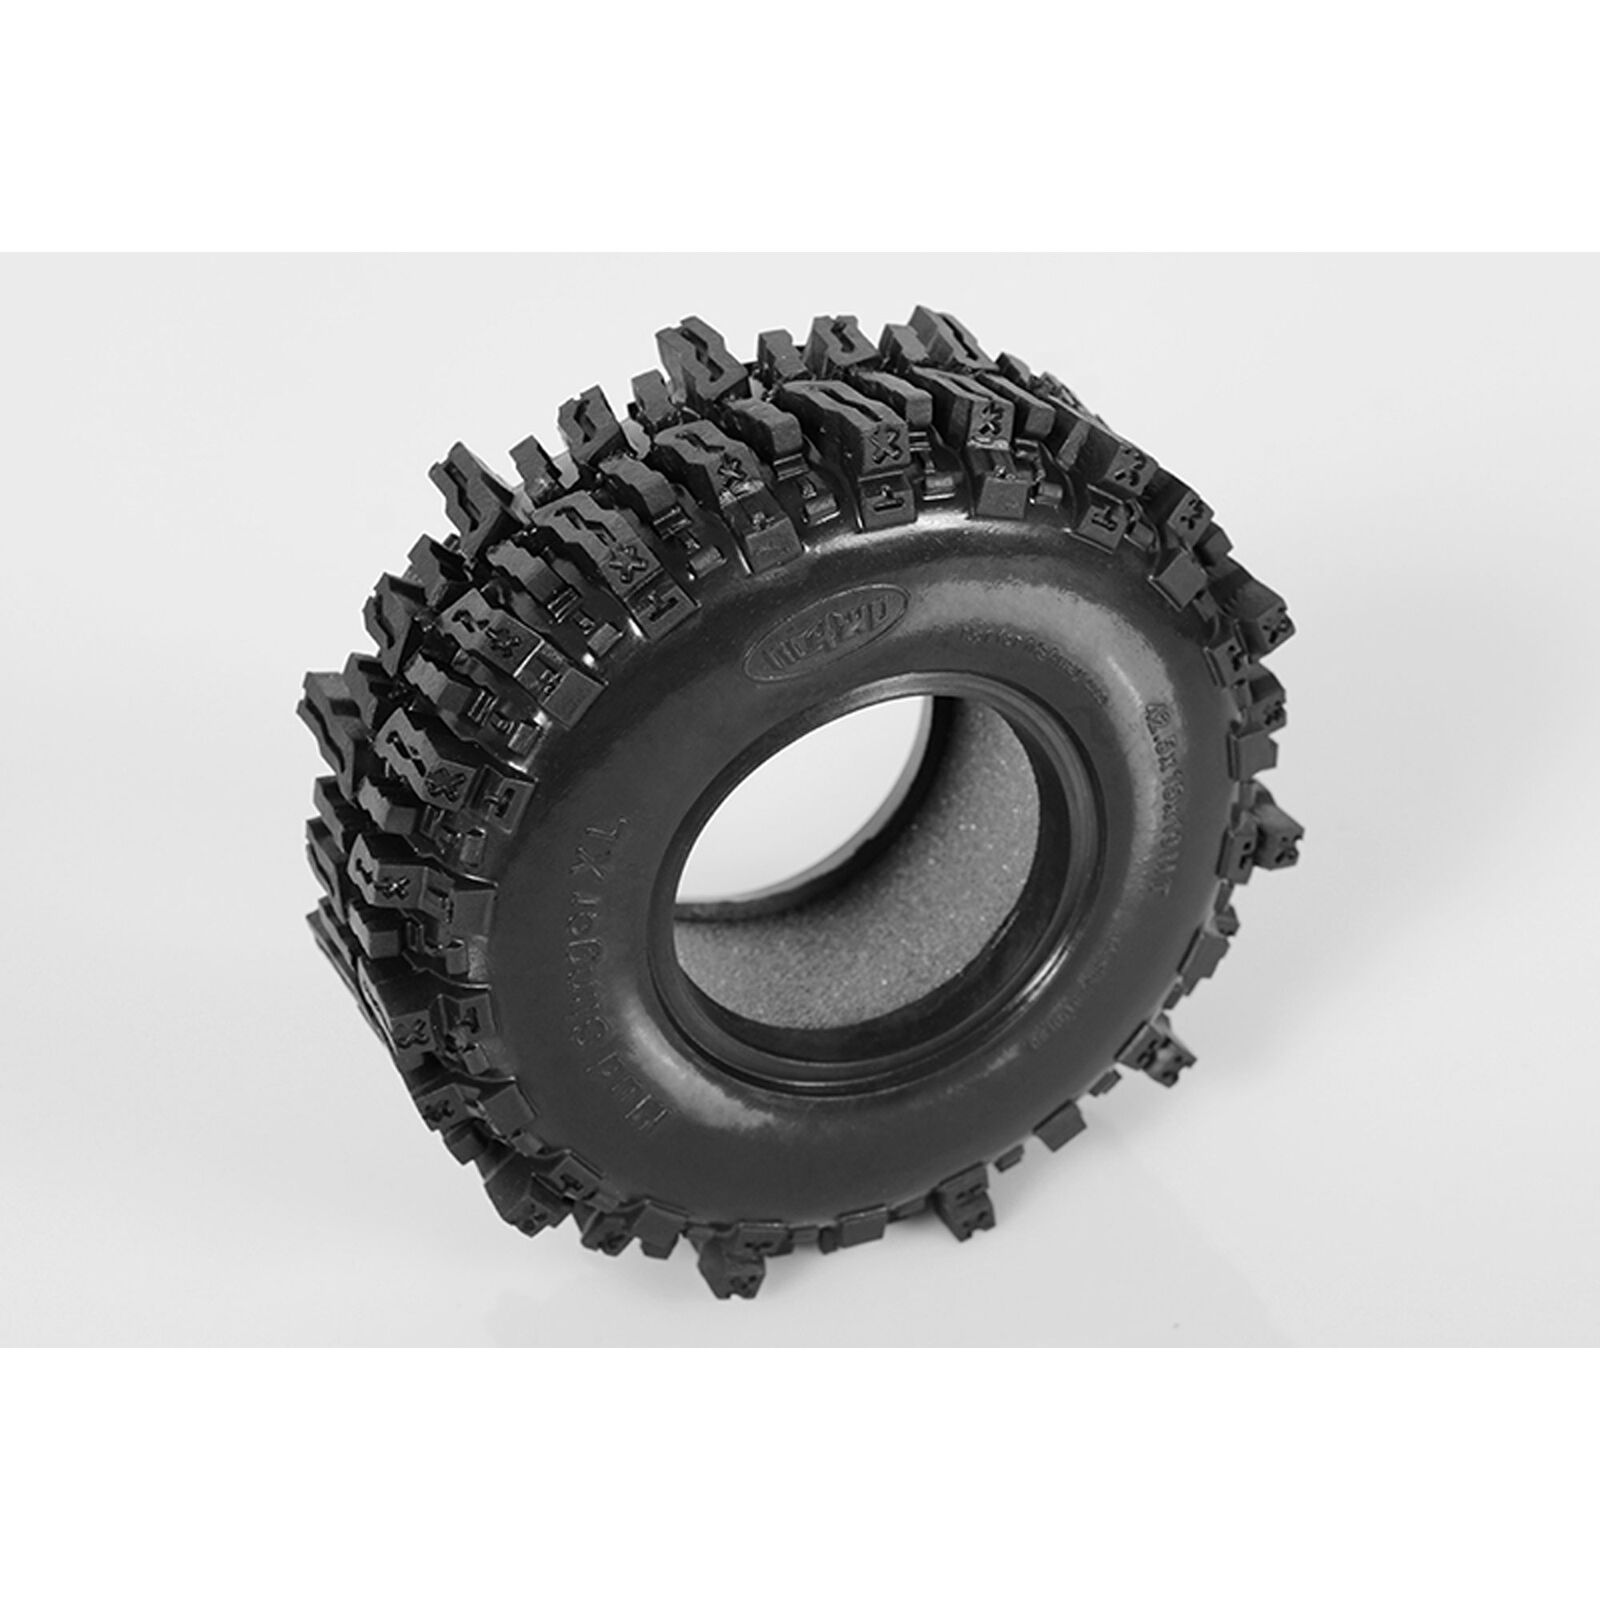 Mud Slinger 2 XL 1.9 Scale Tires (2)